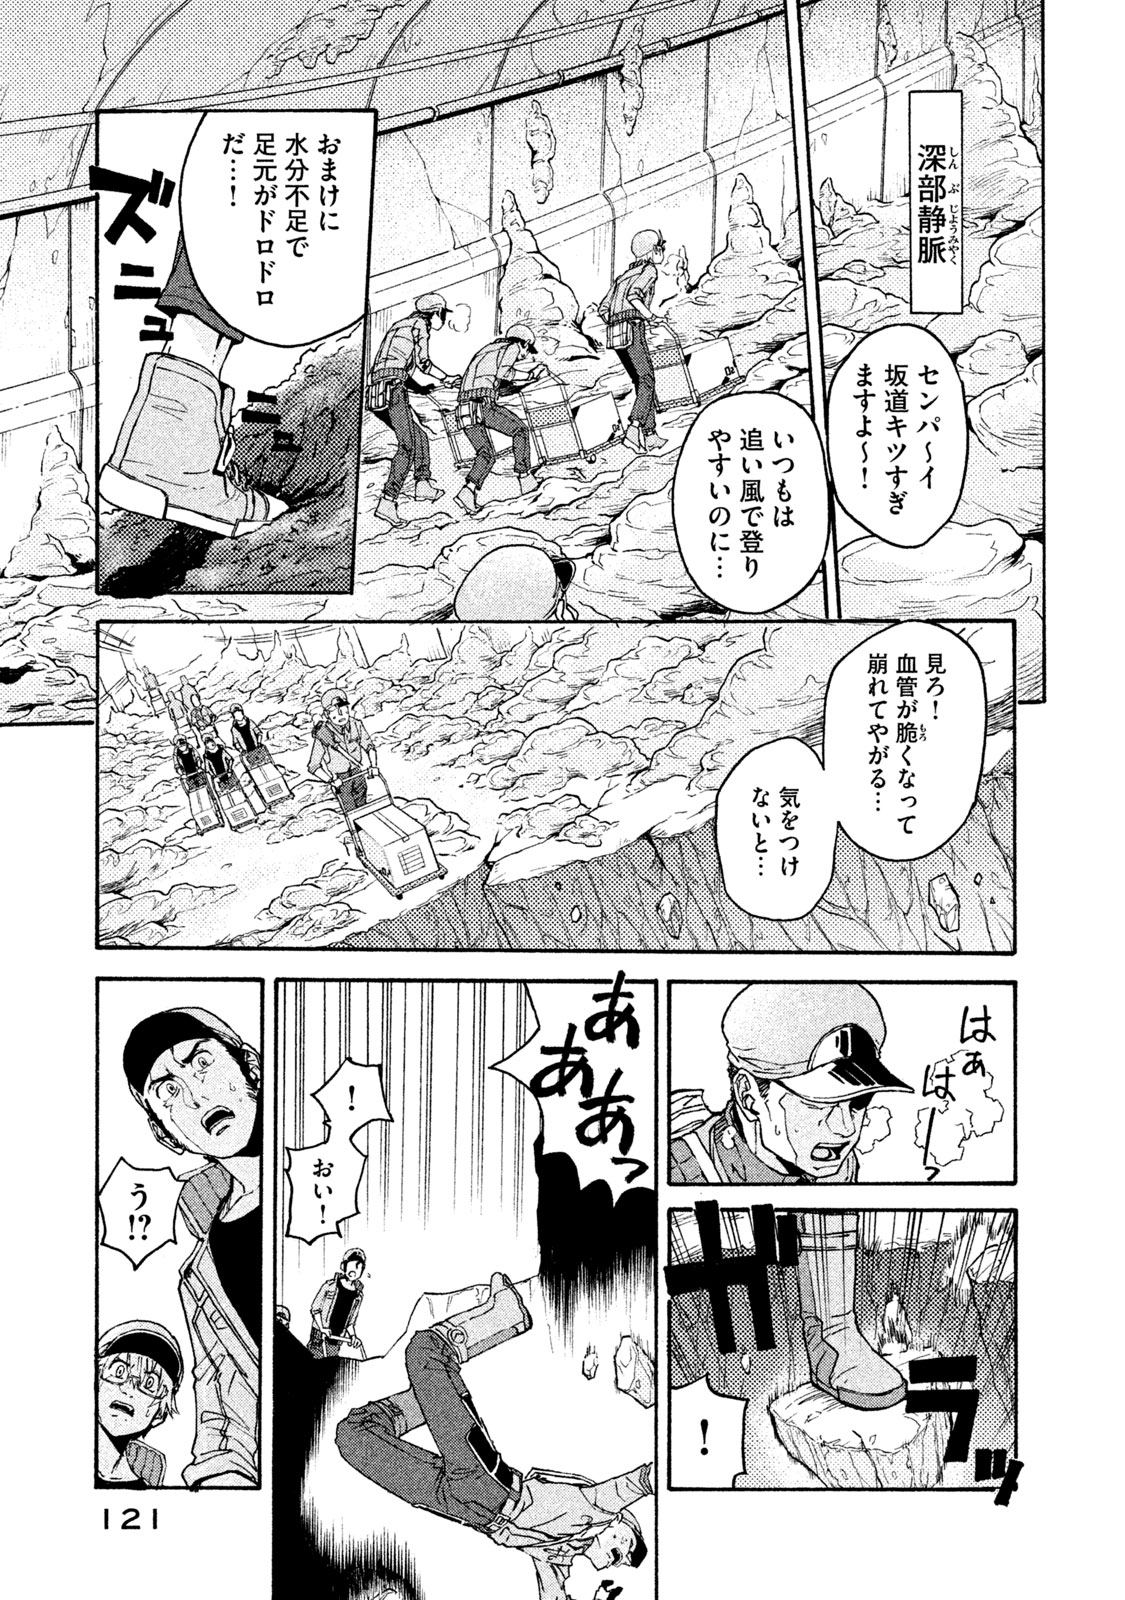 Hataraku Saibou BLACK - Chapter 16 - Page 5